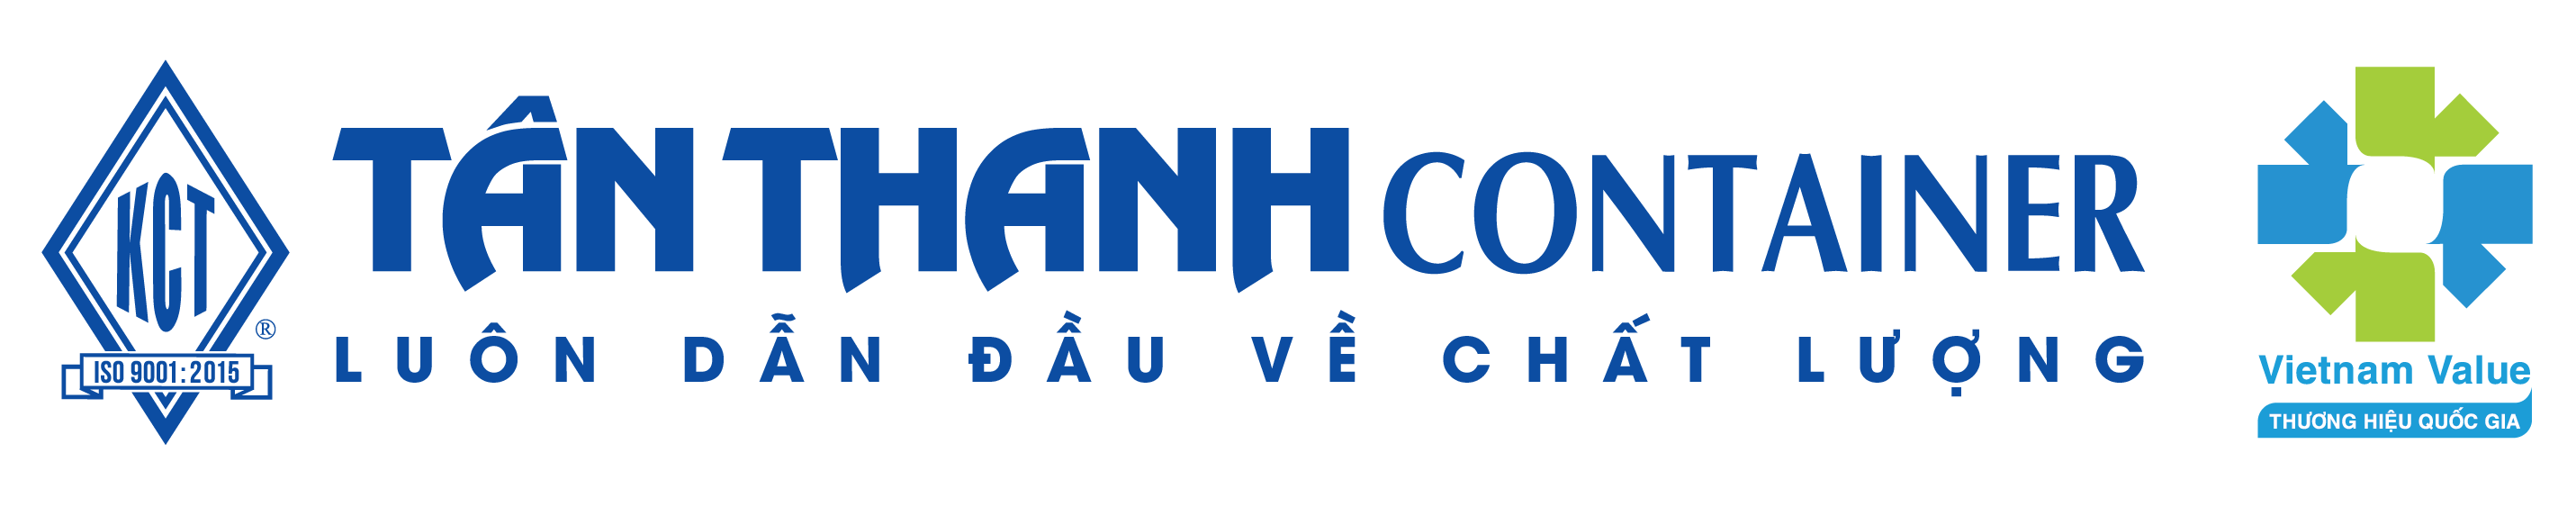 Tân Thanh Container Logo